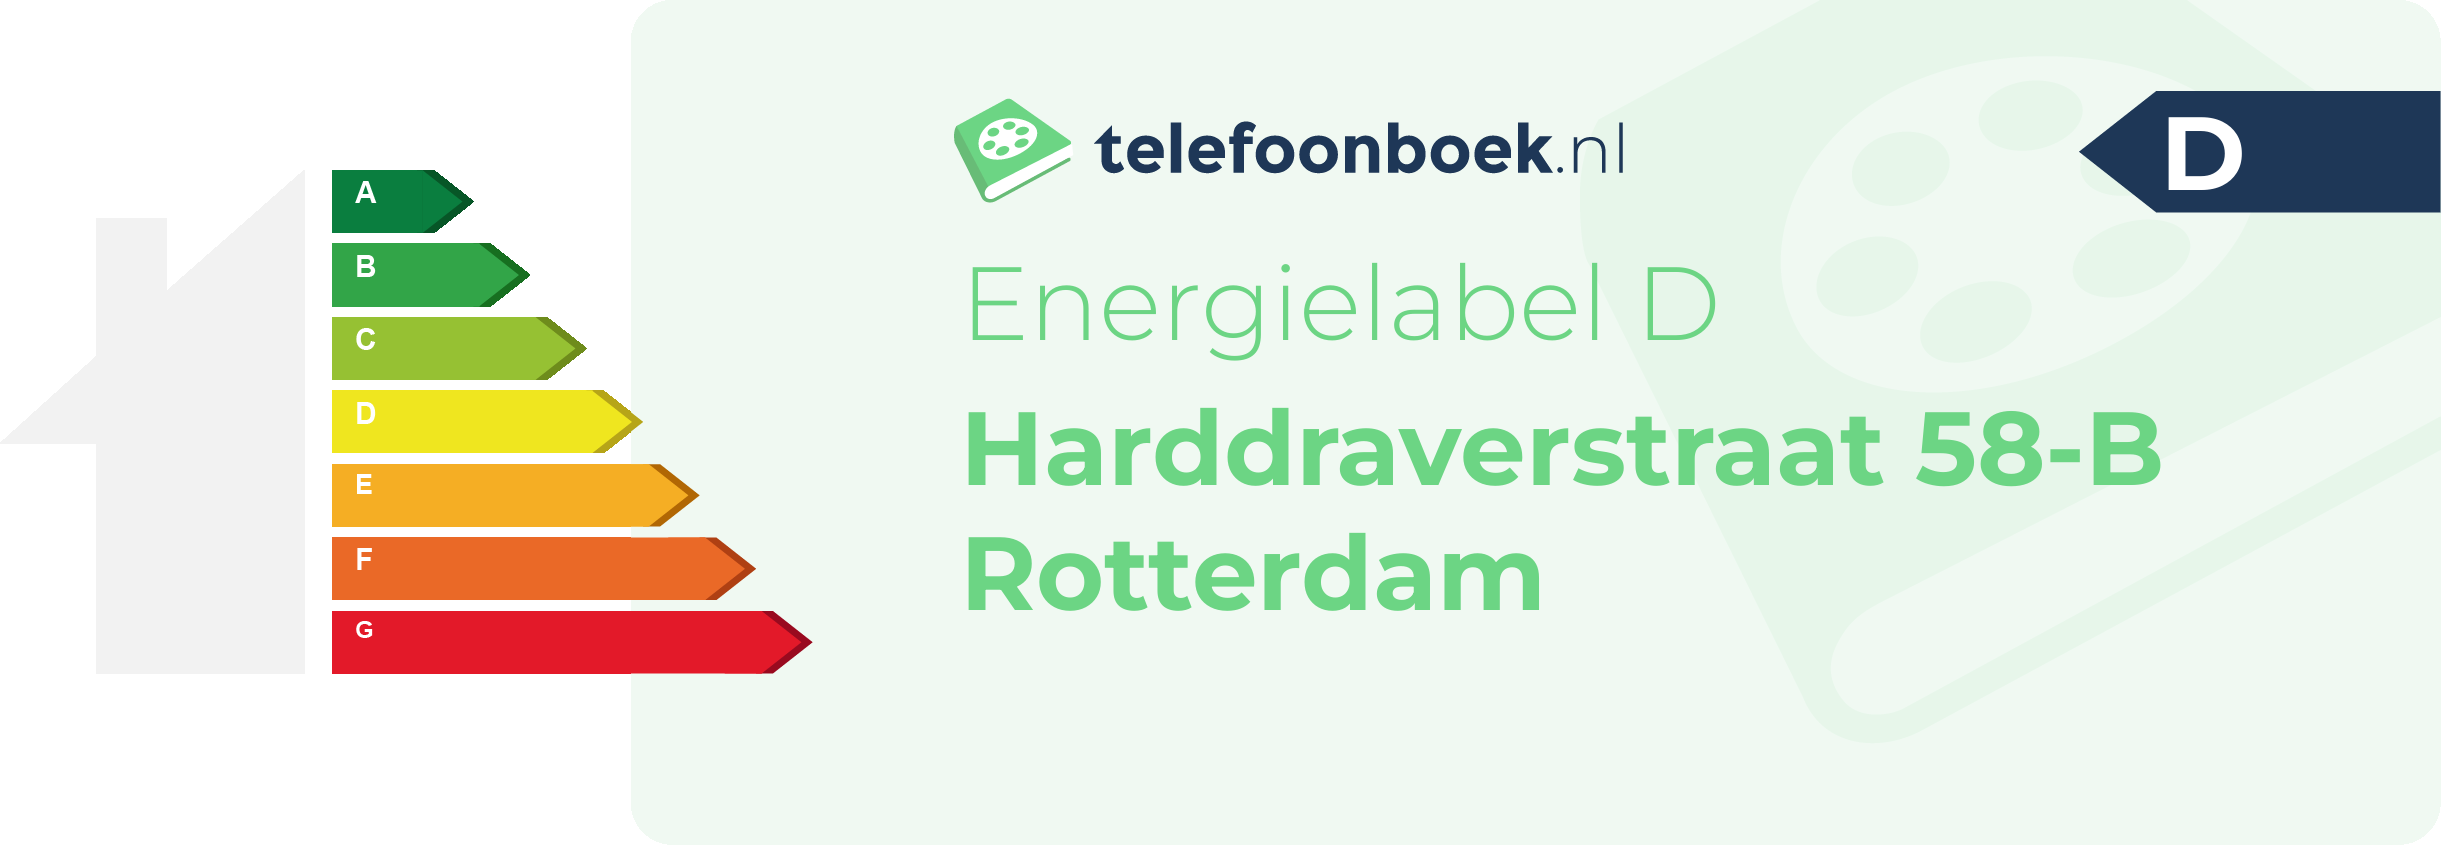 Energielabel Harddraverstraat 58-B Rotterdam